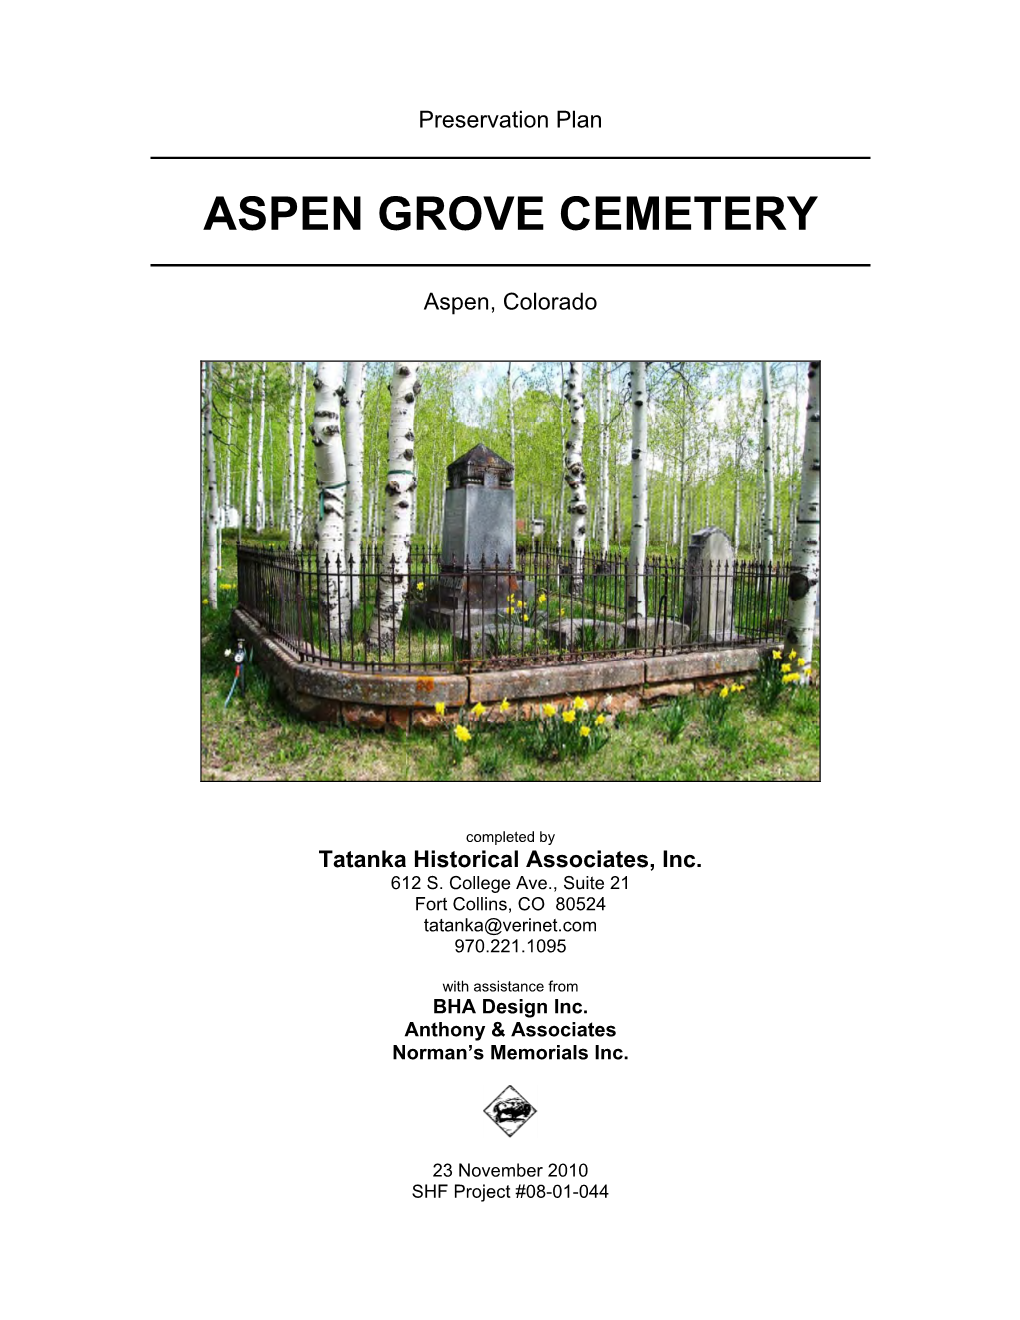 Aspen Grove Cemetery Preservation Plan